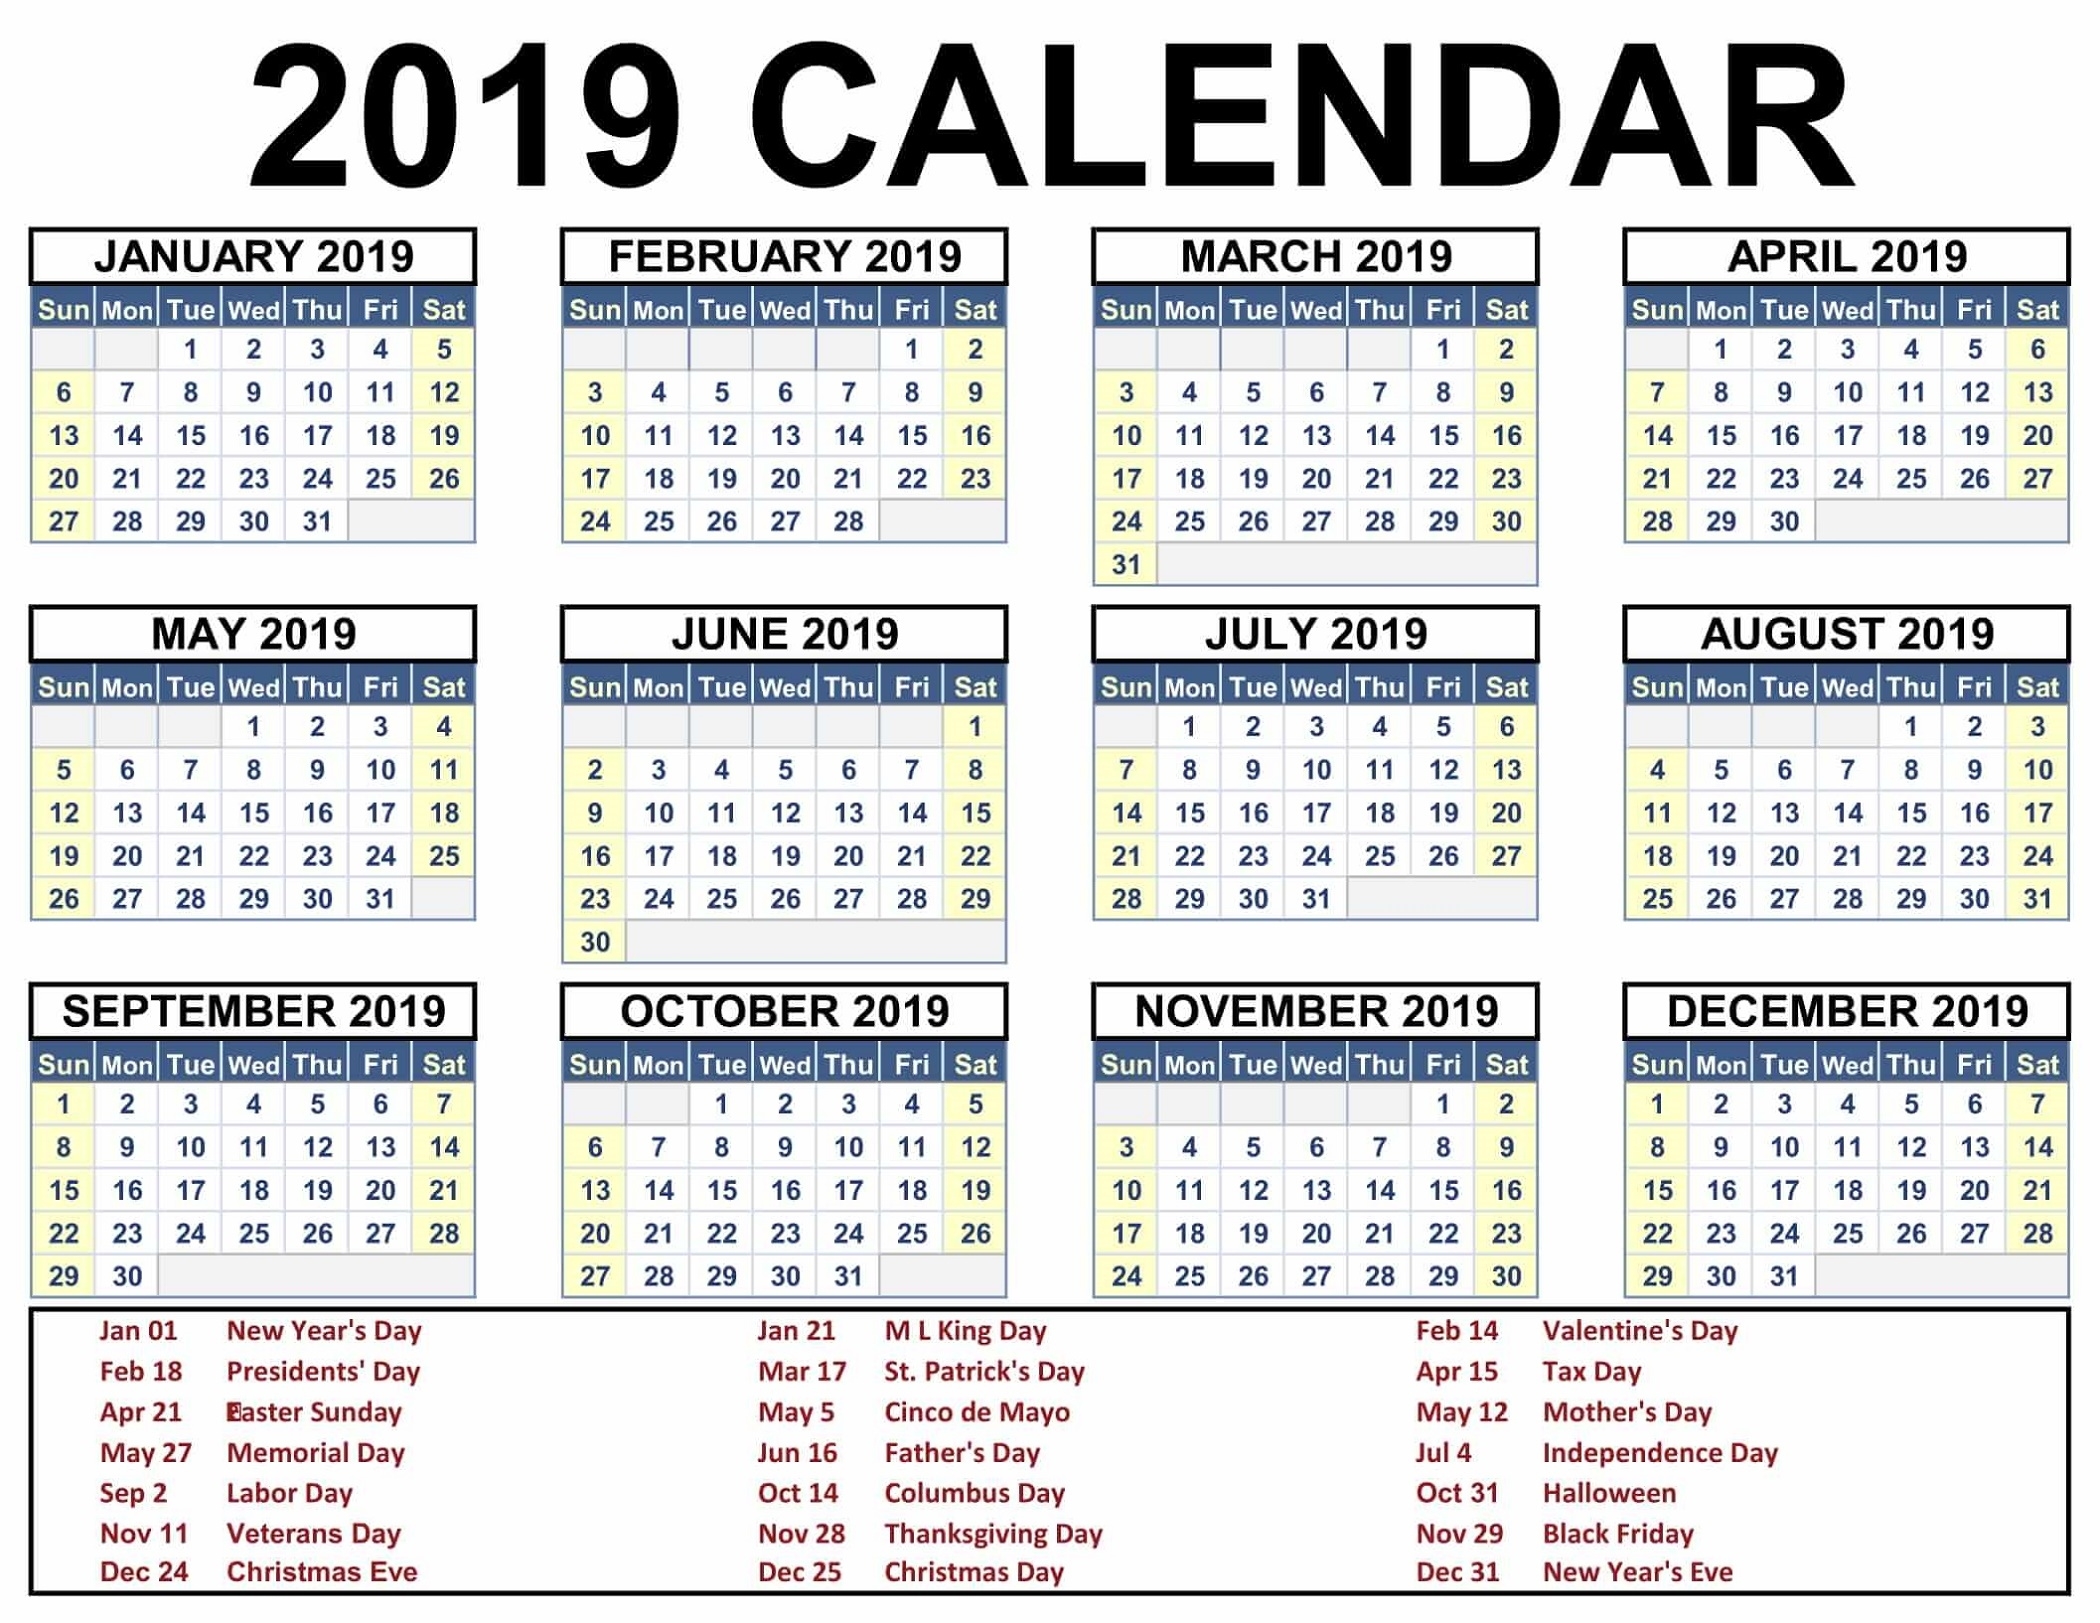 2019 Calendar With Holidays Printable | Calendar Shelter Calendar Hong Kong With Holiday Print